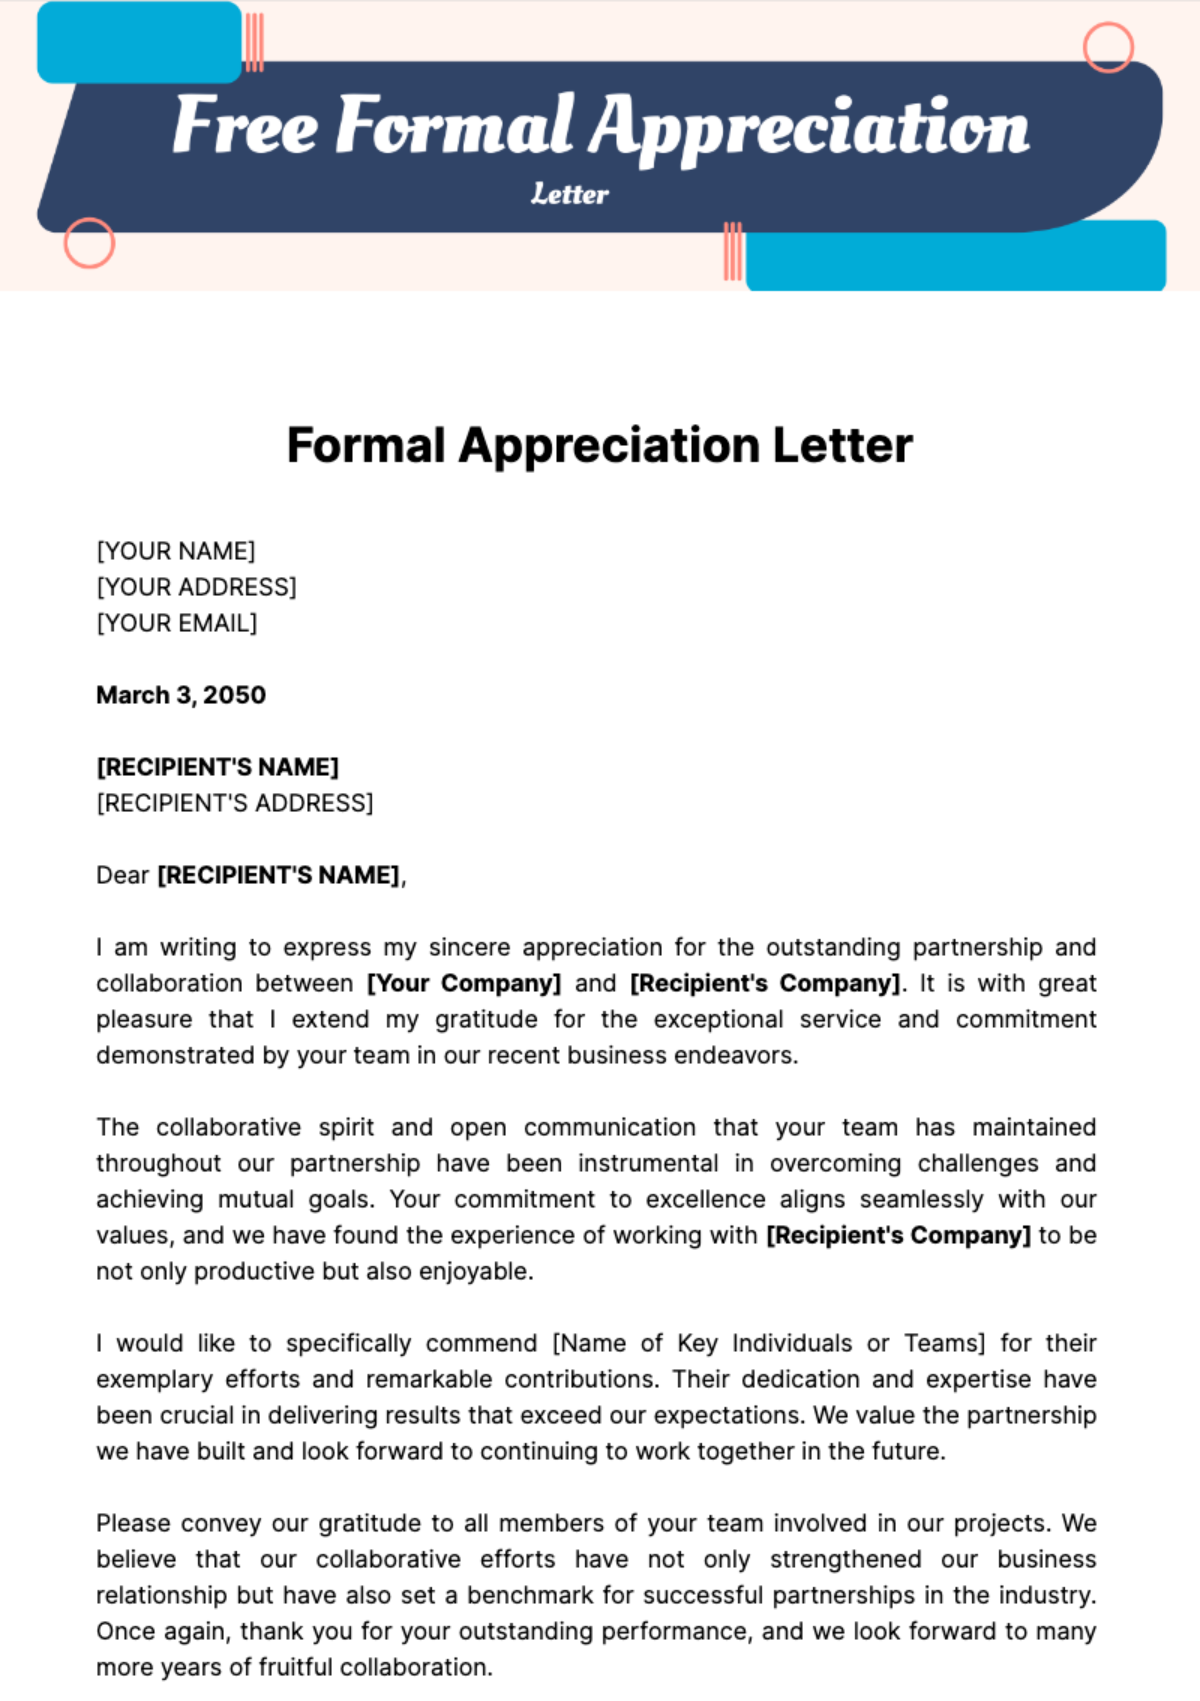 Free Formal Appreciation Letter Template